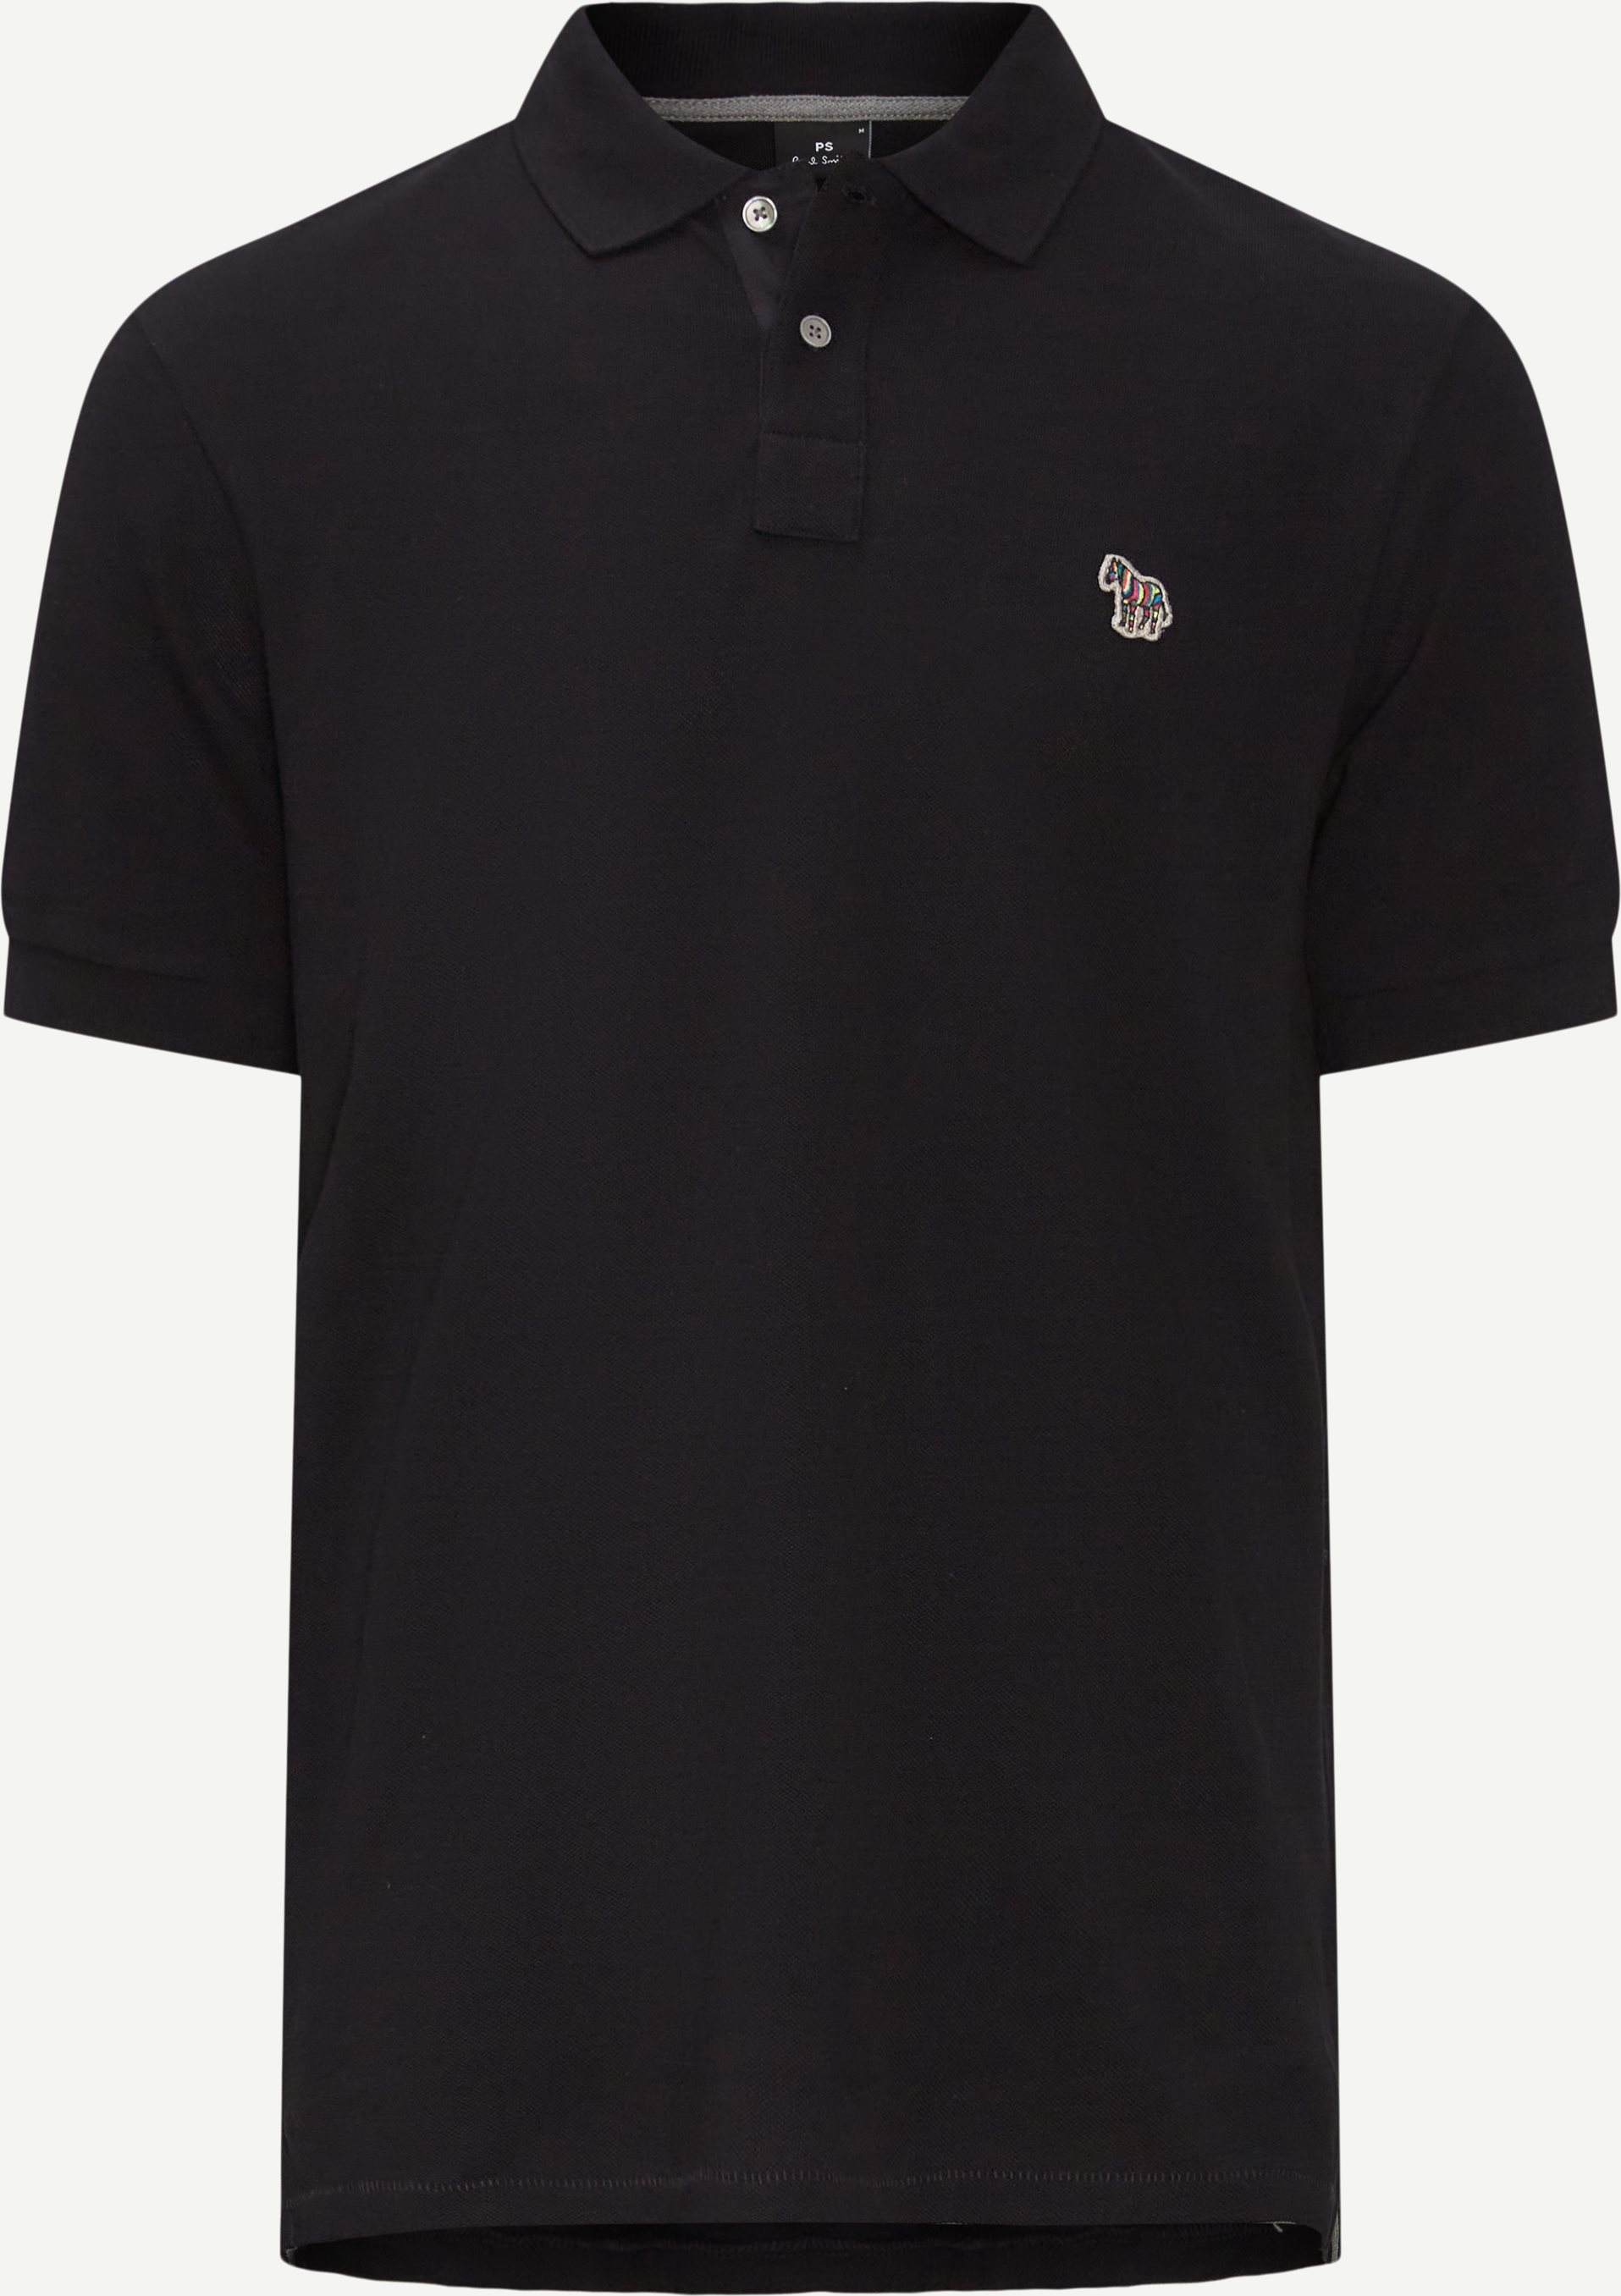 Zebra polo shirt - T-shirts - Regular fit - Sort